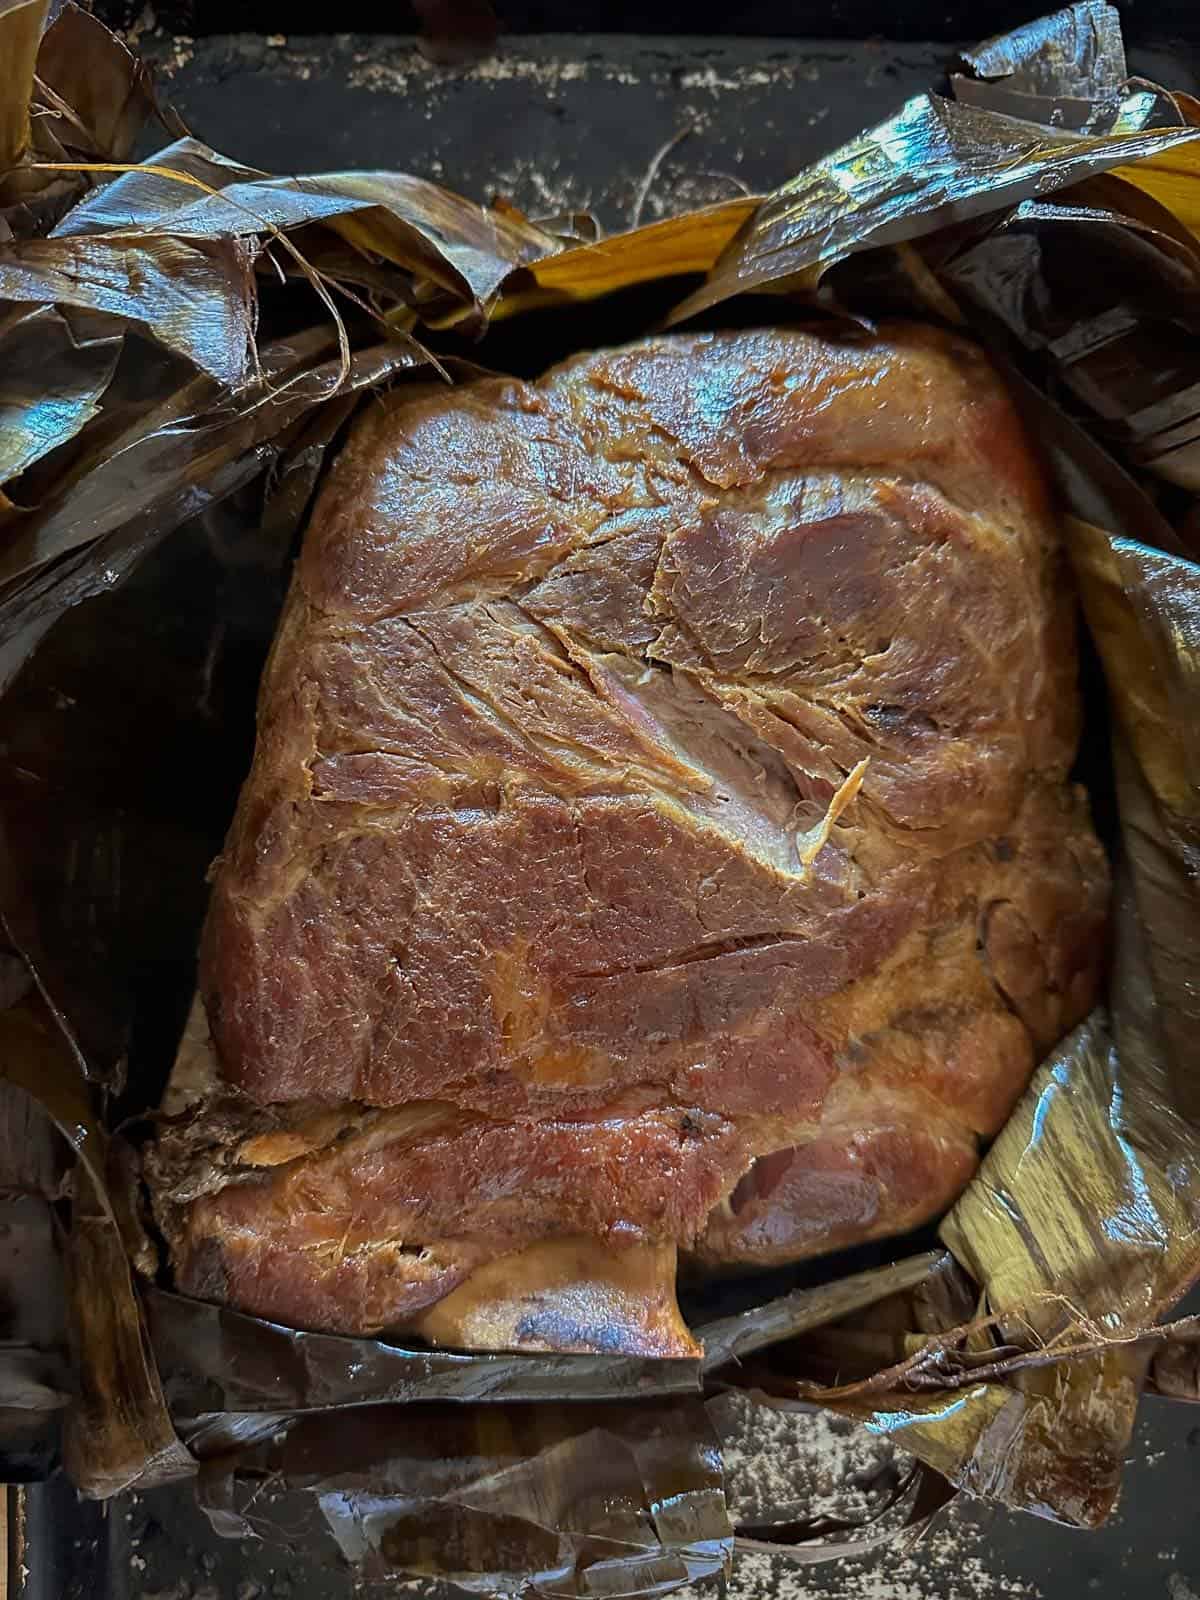 kalua pork unwrapped after smoking